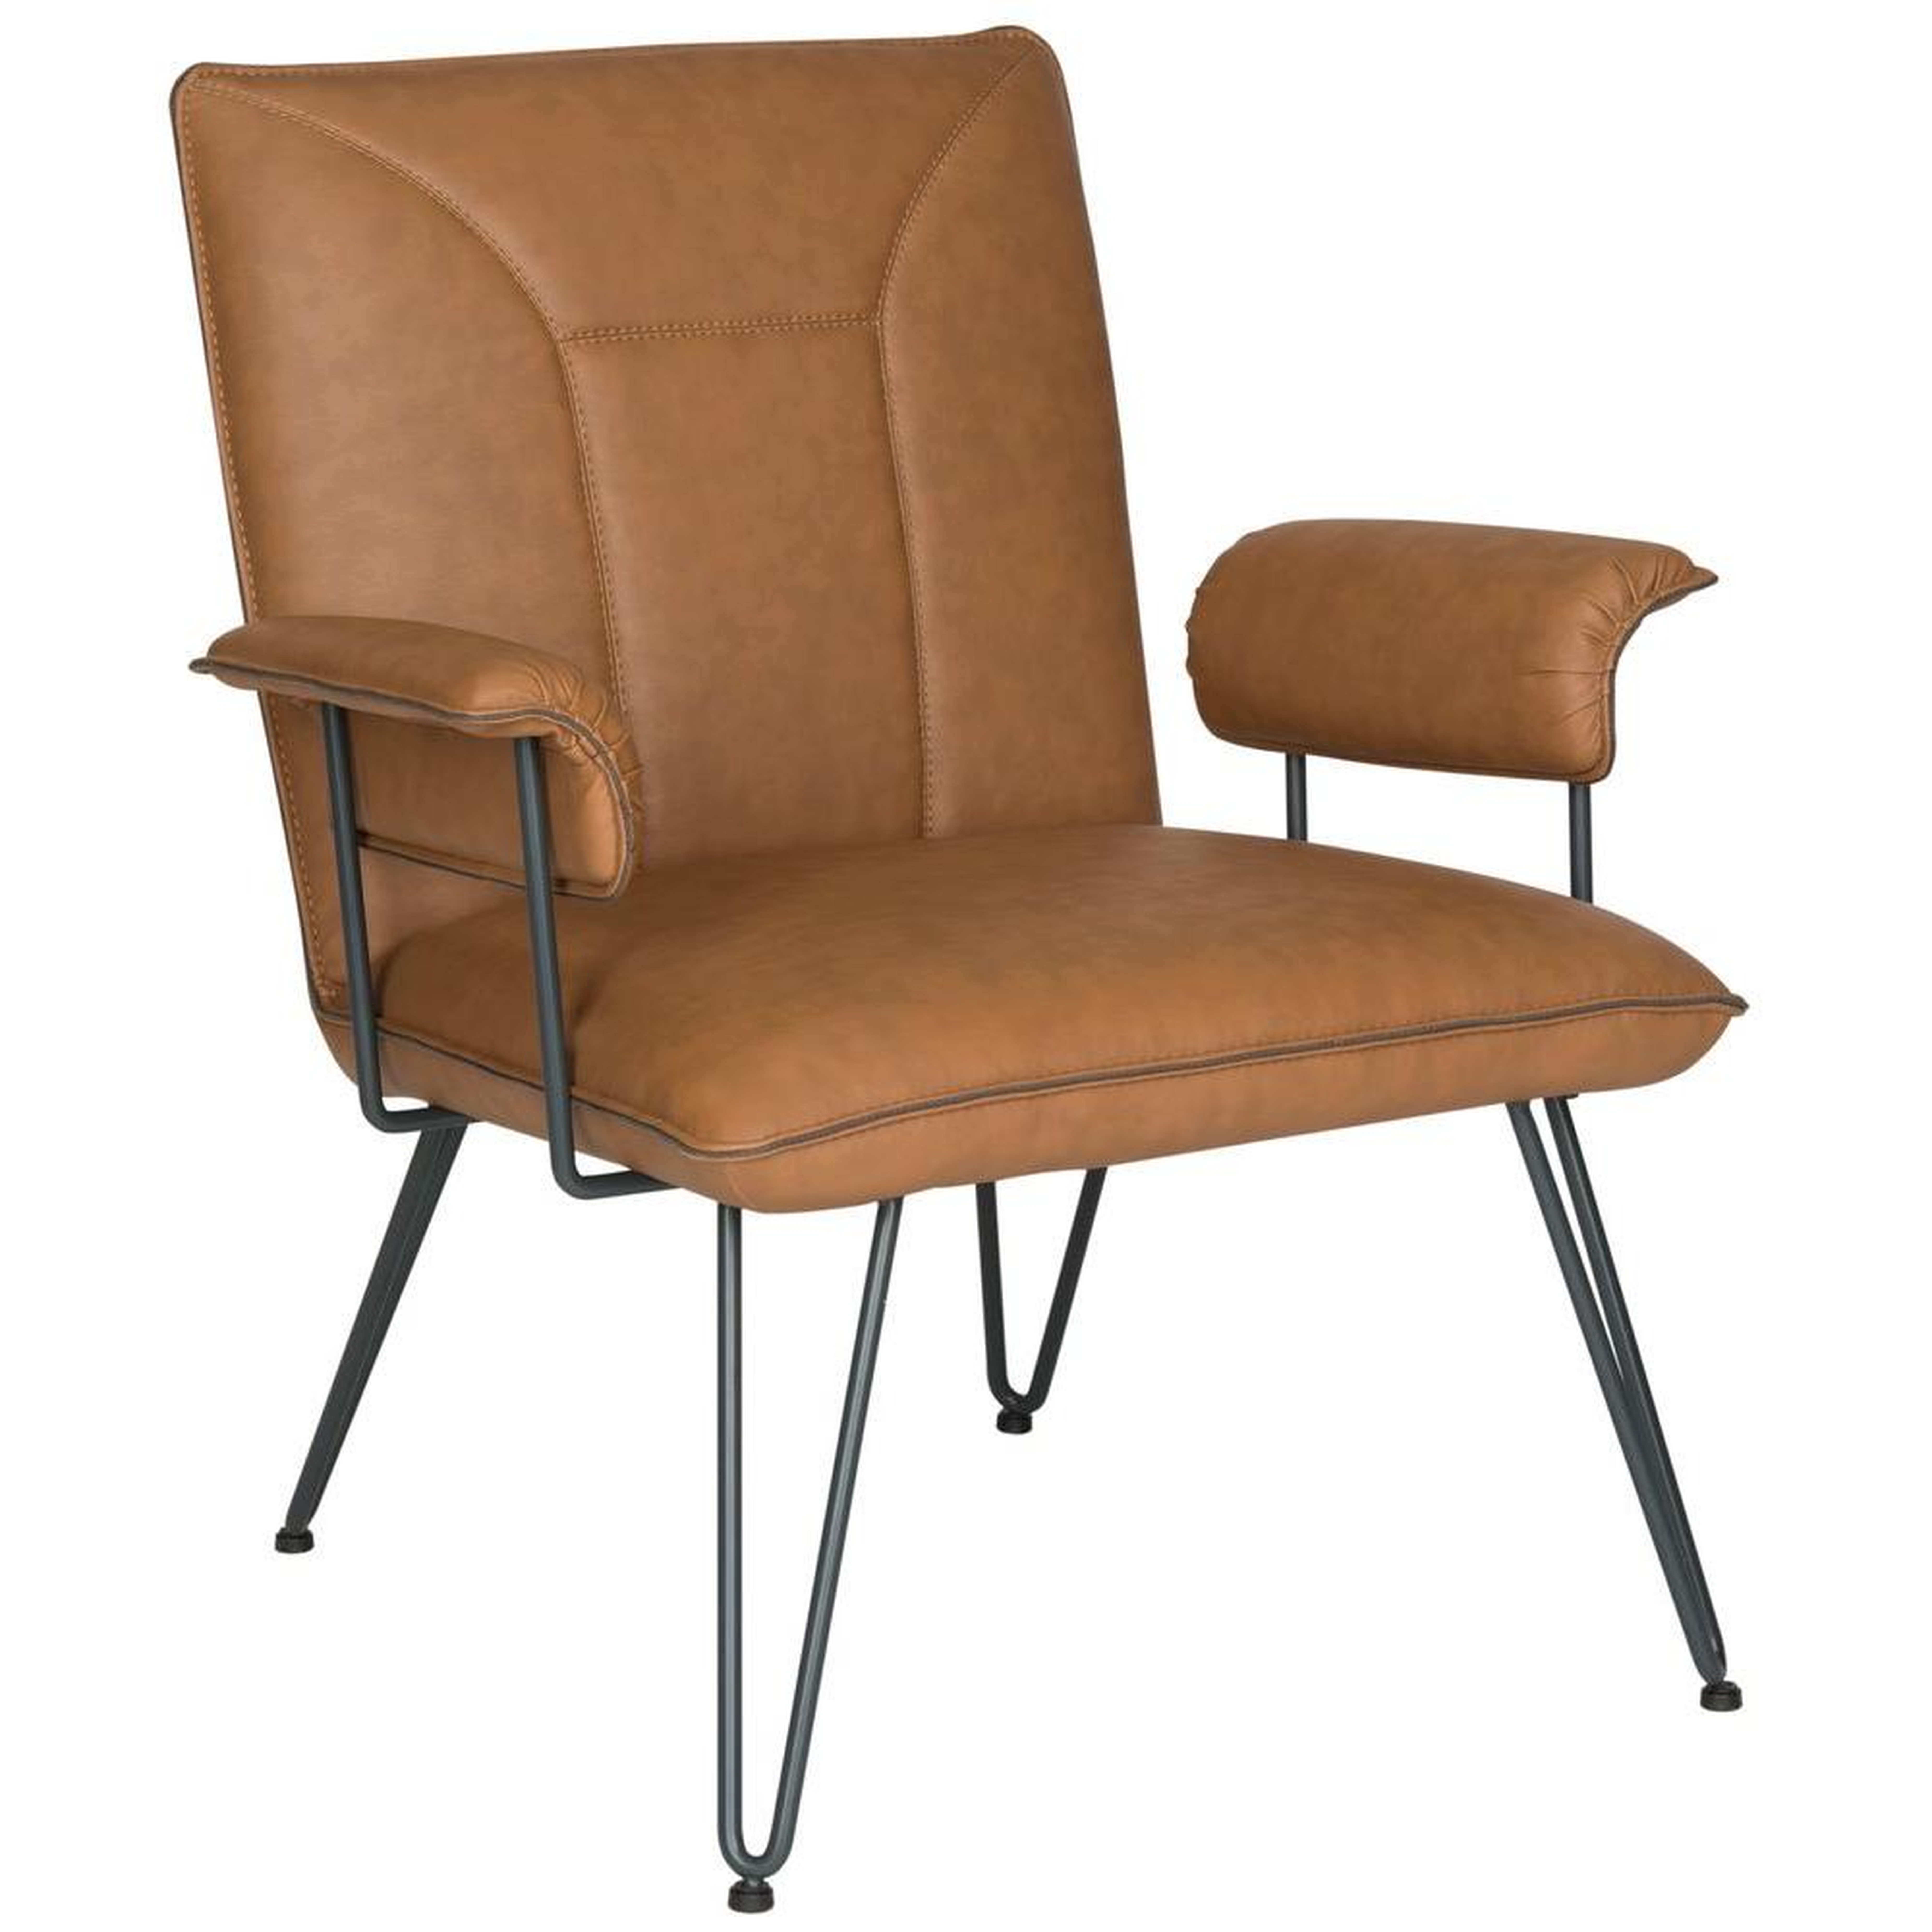 Johannes 17.3"H Mid Century Modern Leather Arm Chair - Camel/Black - Arlo Home - Arlo Home